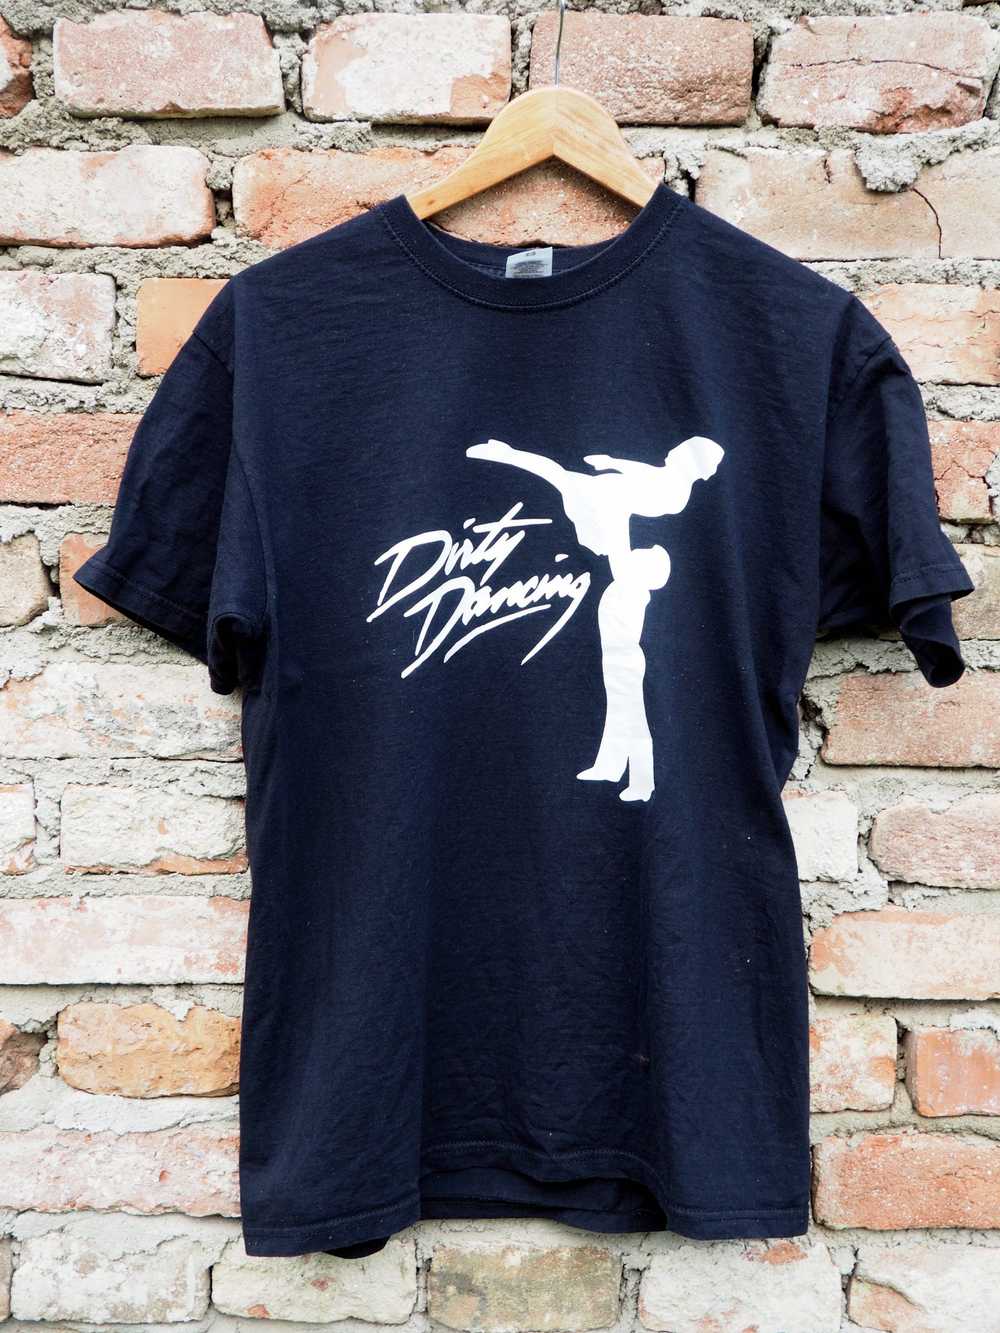 Vintage Dirty Dancing t-shirt - image 1